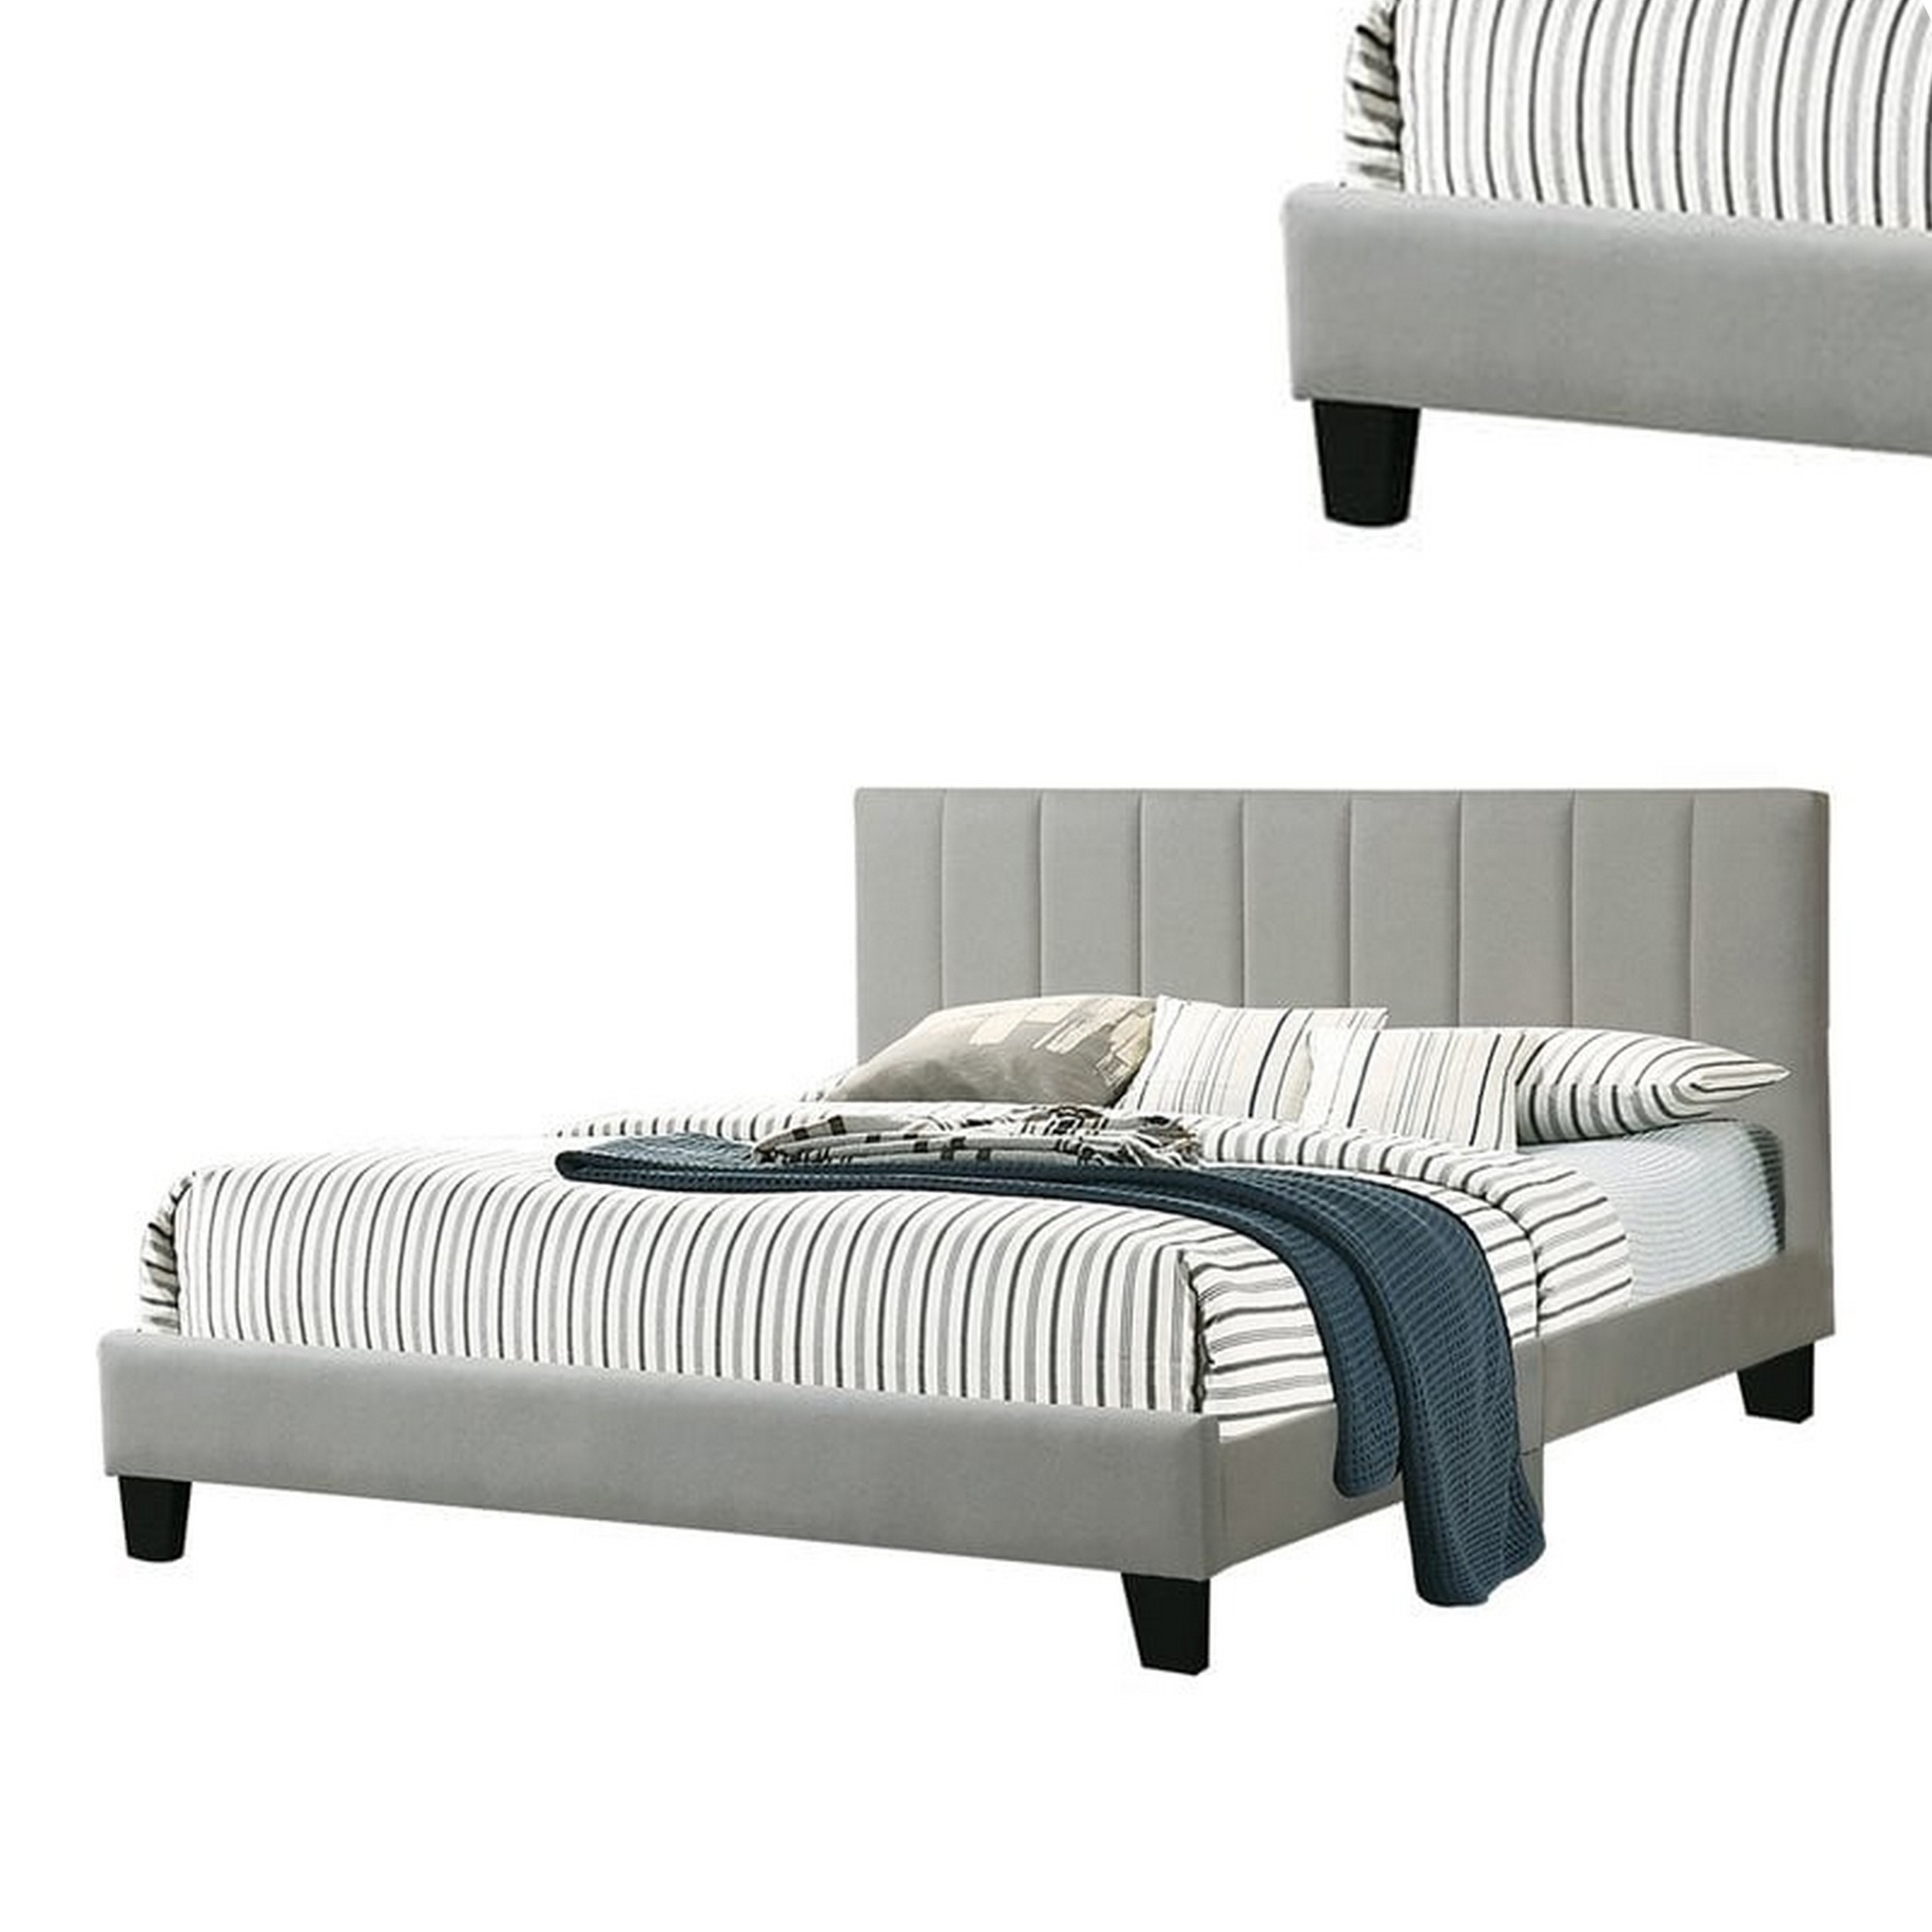 Eve Platform Queen Size Bed, Vertical Channel Tufted Light Gray Upholstery- Saltoro Sherpi